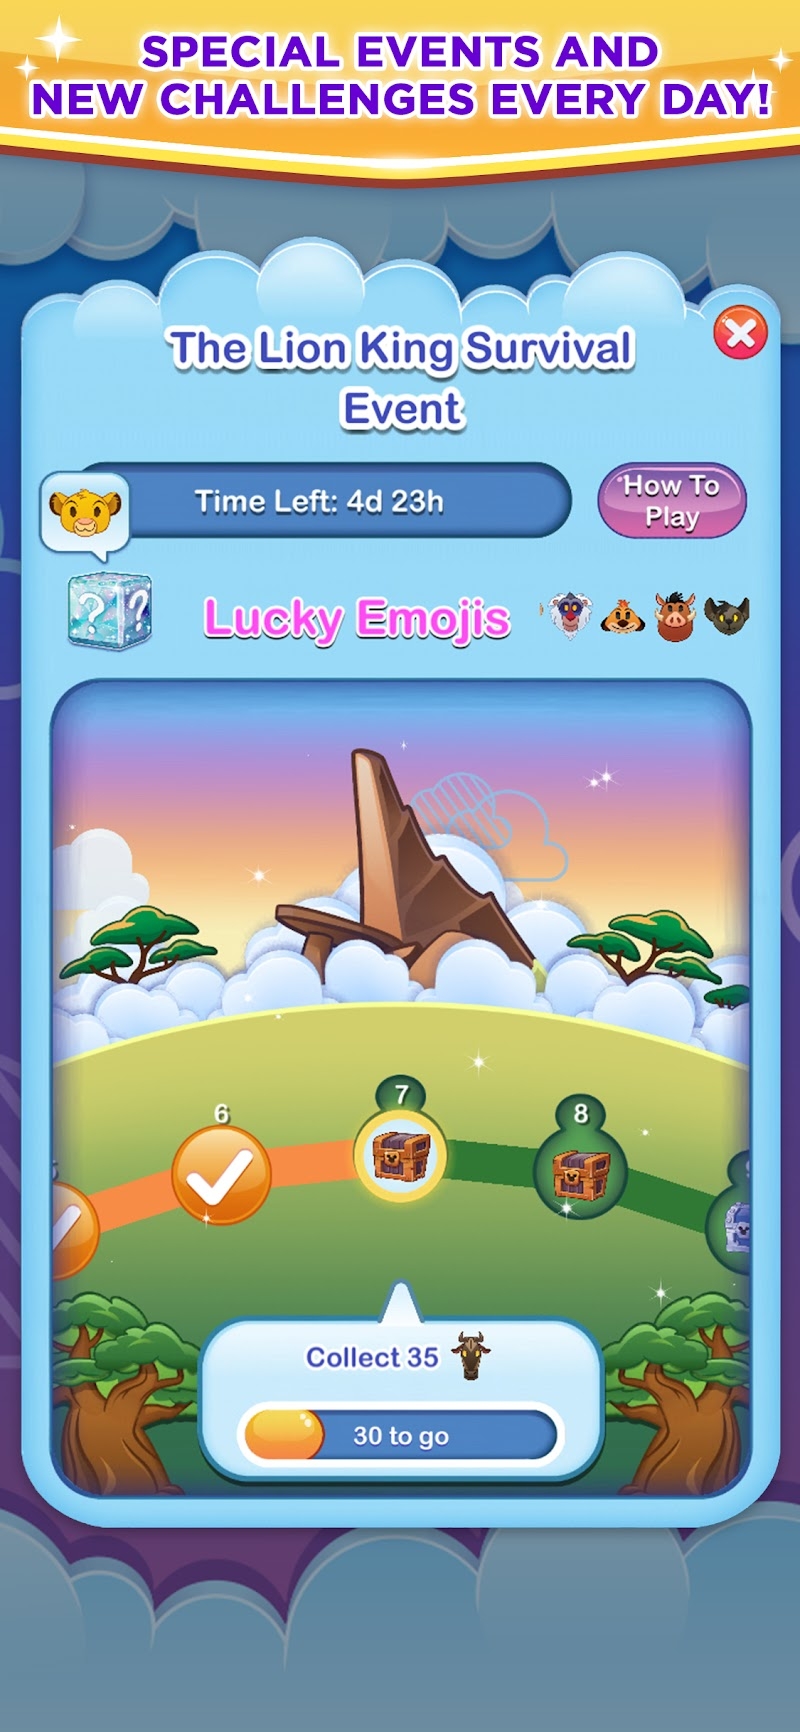 Disney Emoji Blitz - Disney Match 3 Puzzle Games